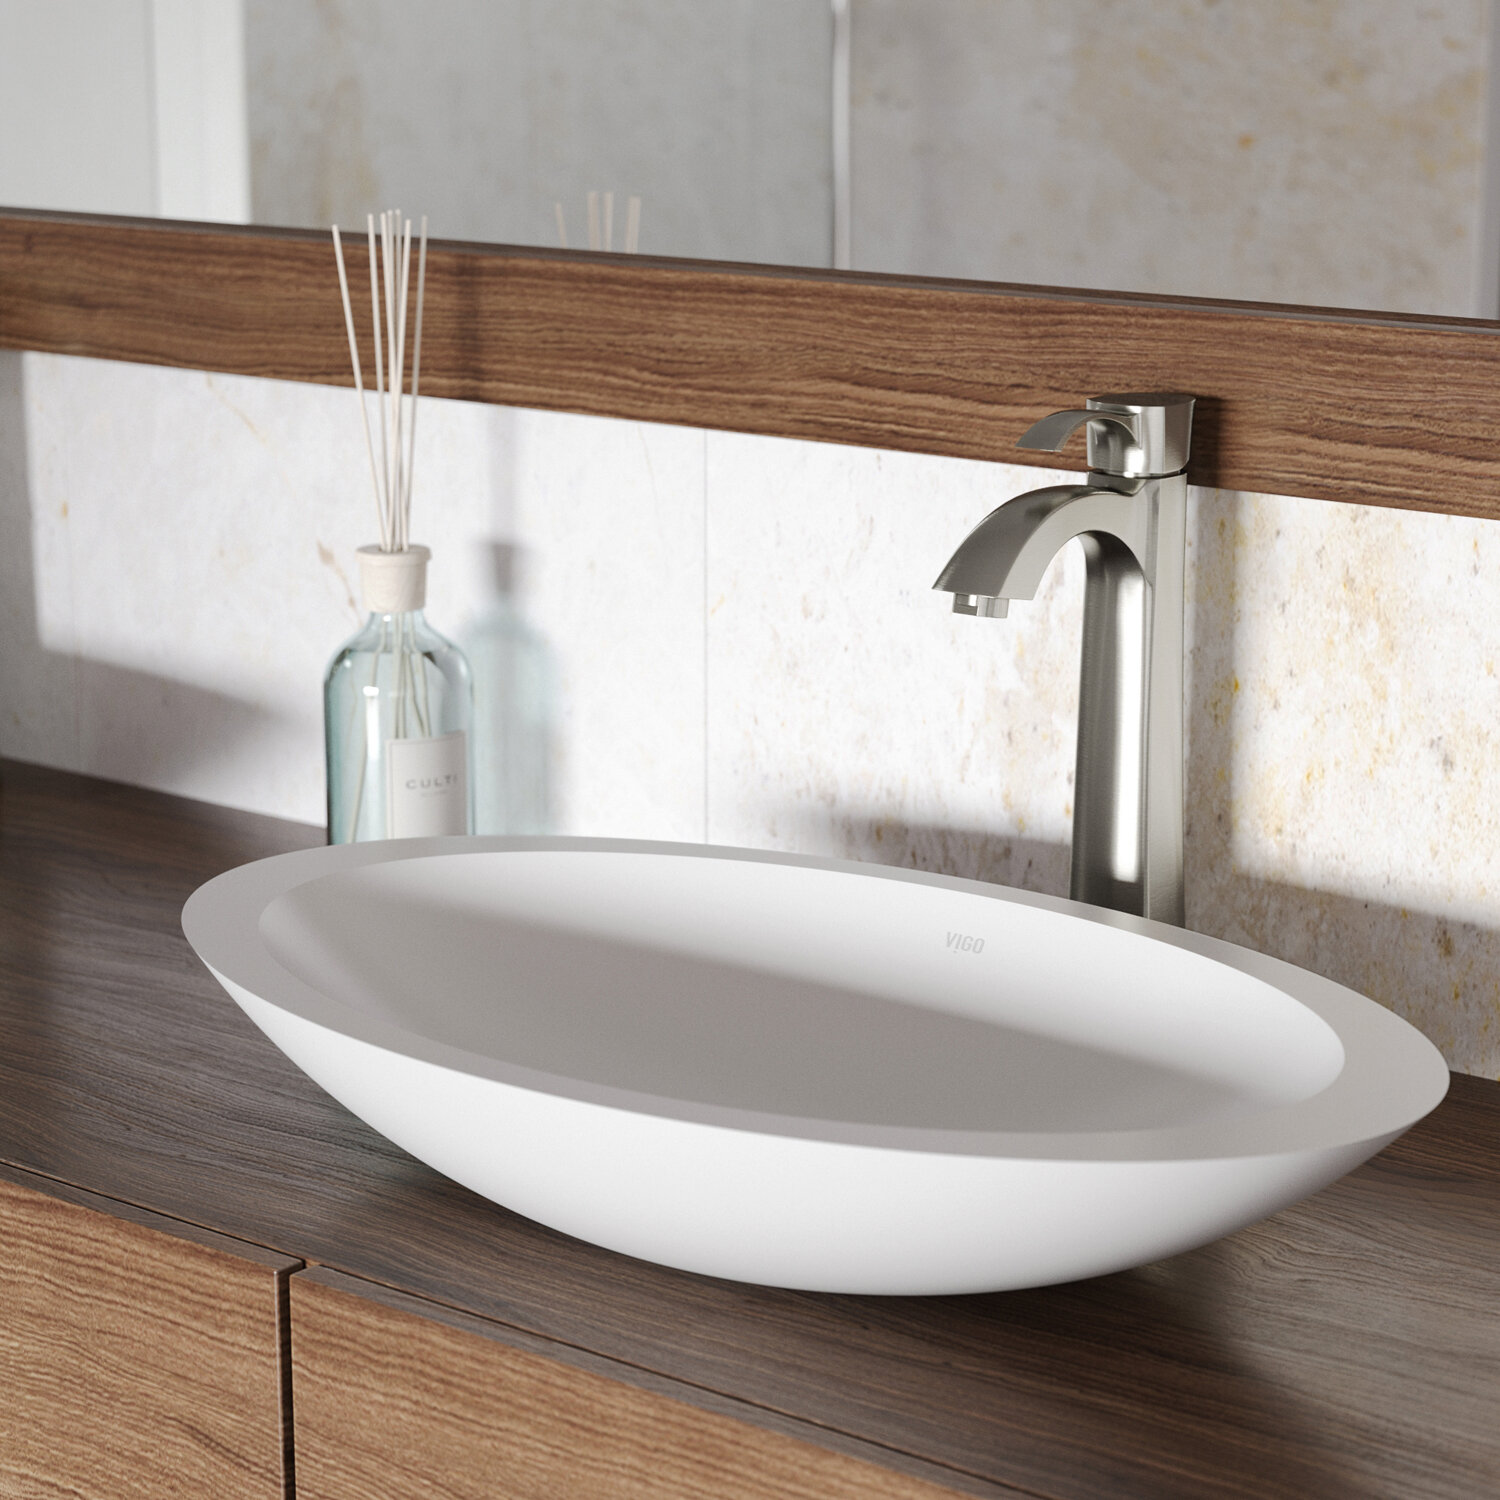 Vigo Matte Stone White Stone Handmade Oval Vessel Bathroom Sink Reviews Wayfair